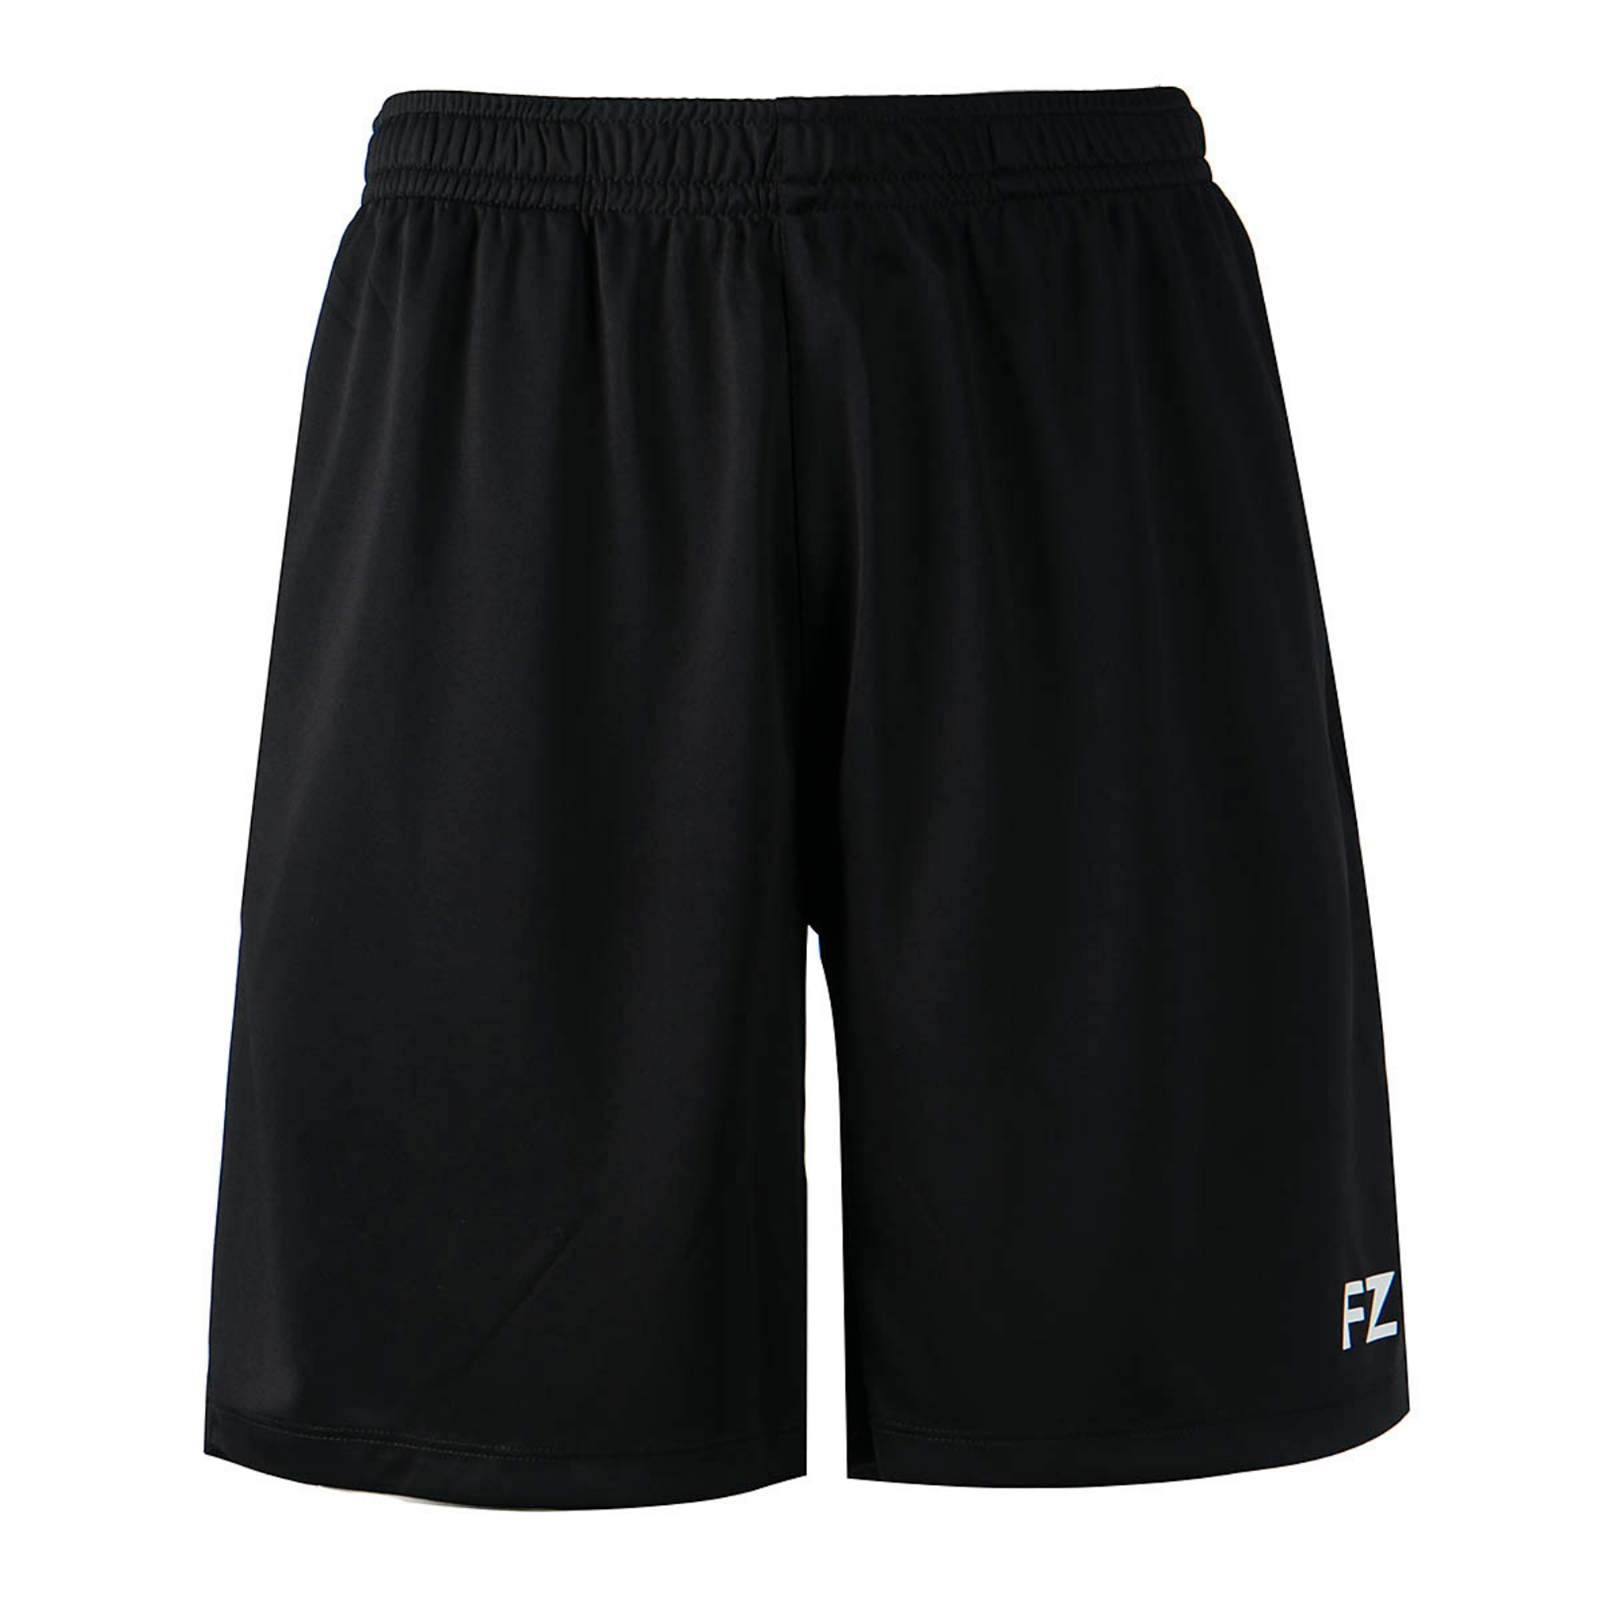 Forza Landos Shorts Black | Black Forza shorts for men